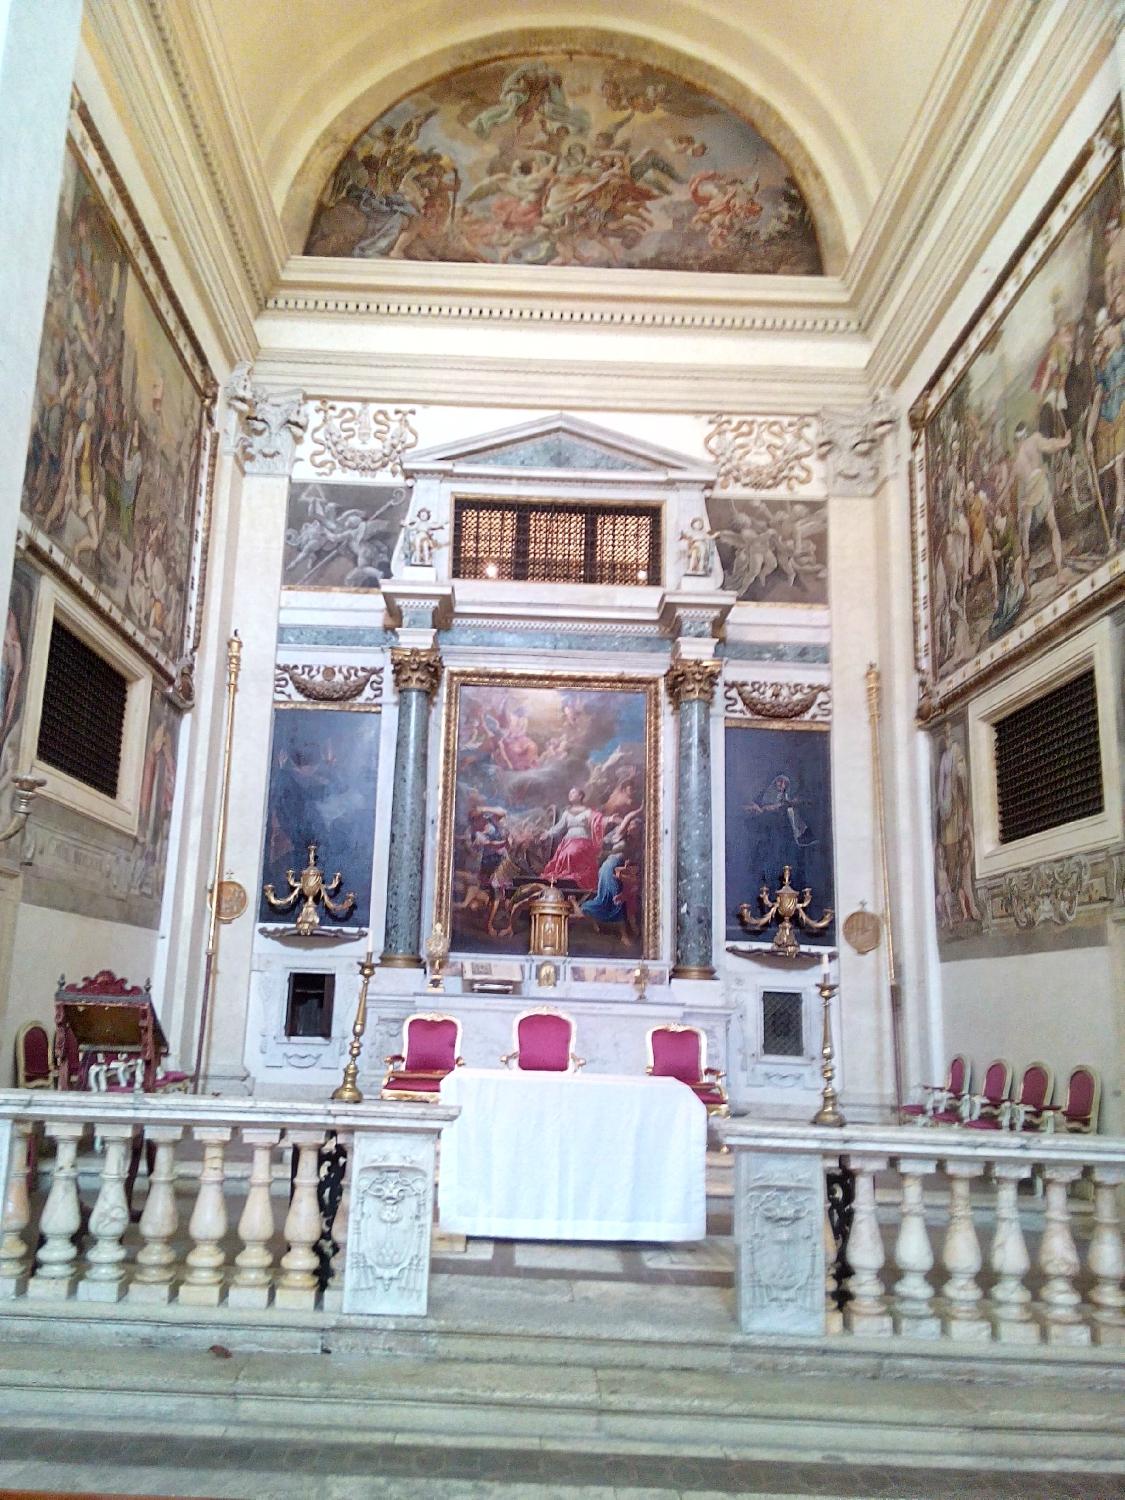 Chiesa di Santa Caterina dei Funari